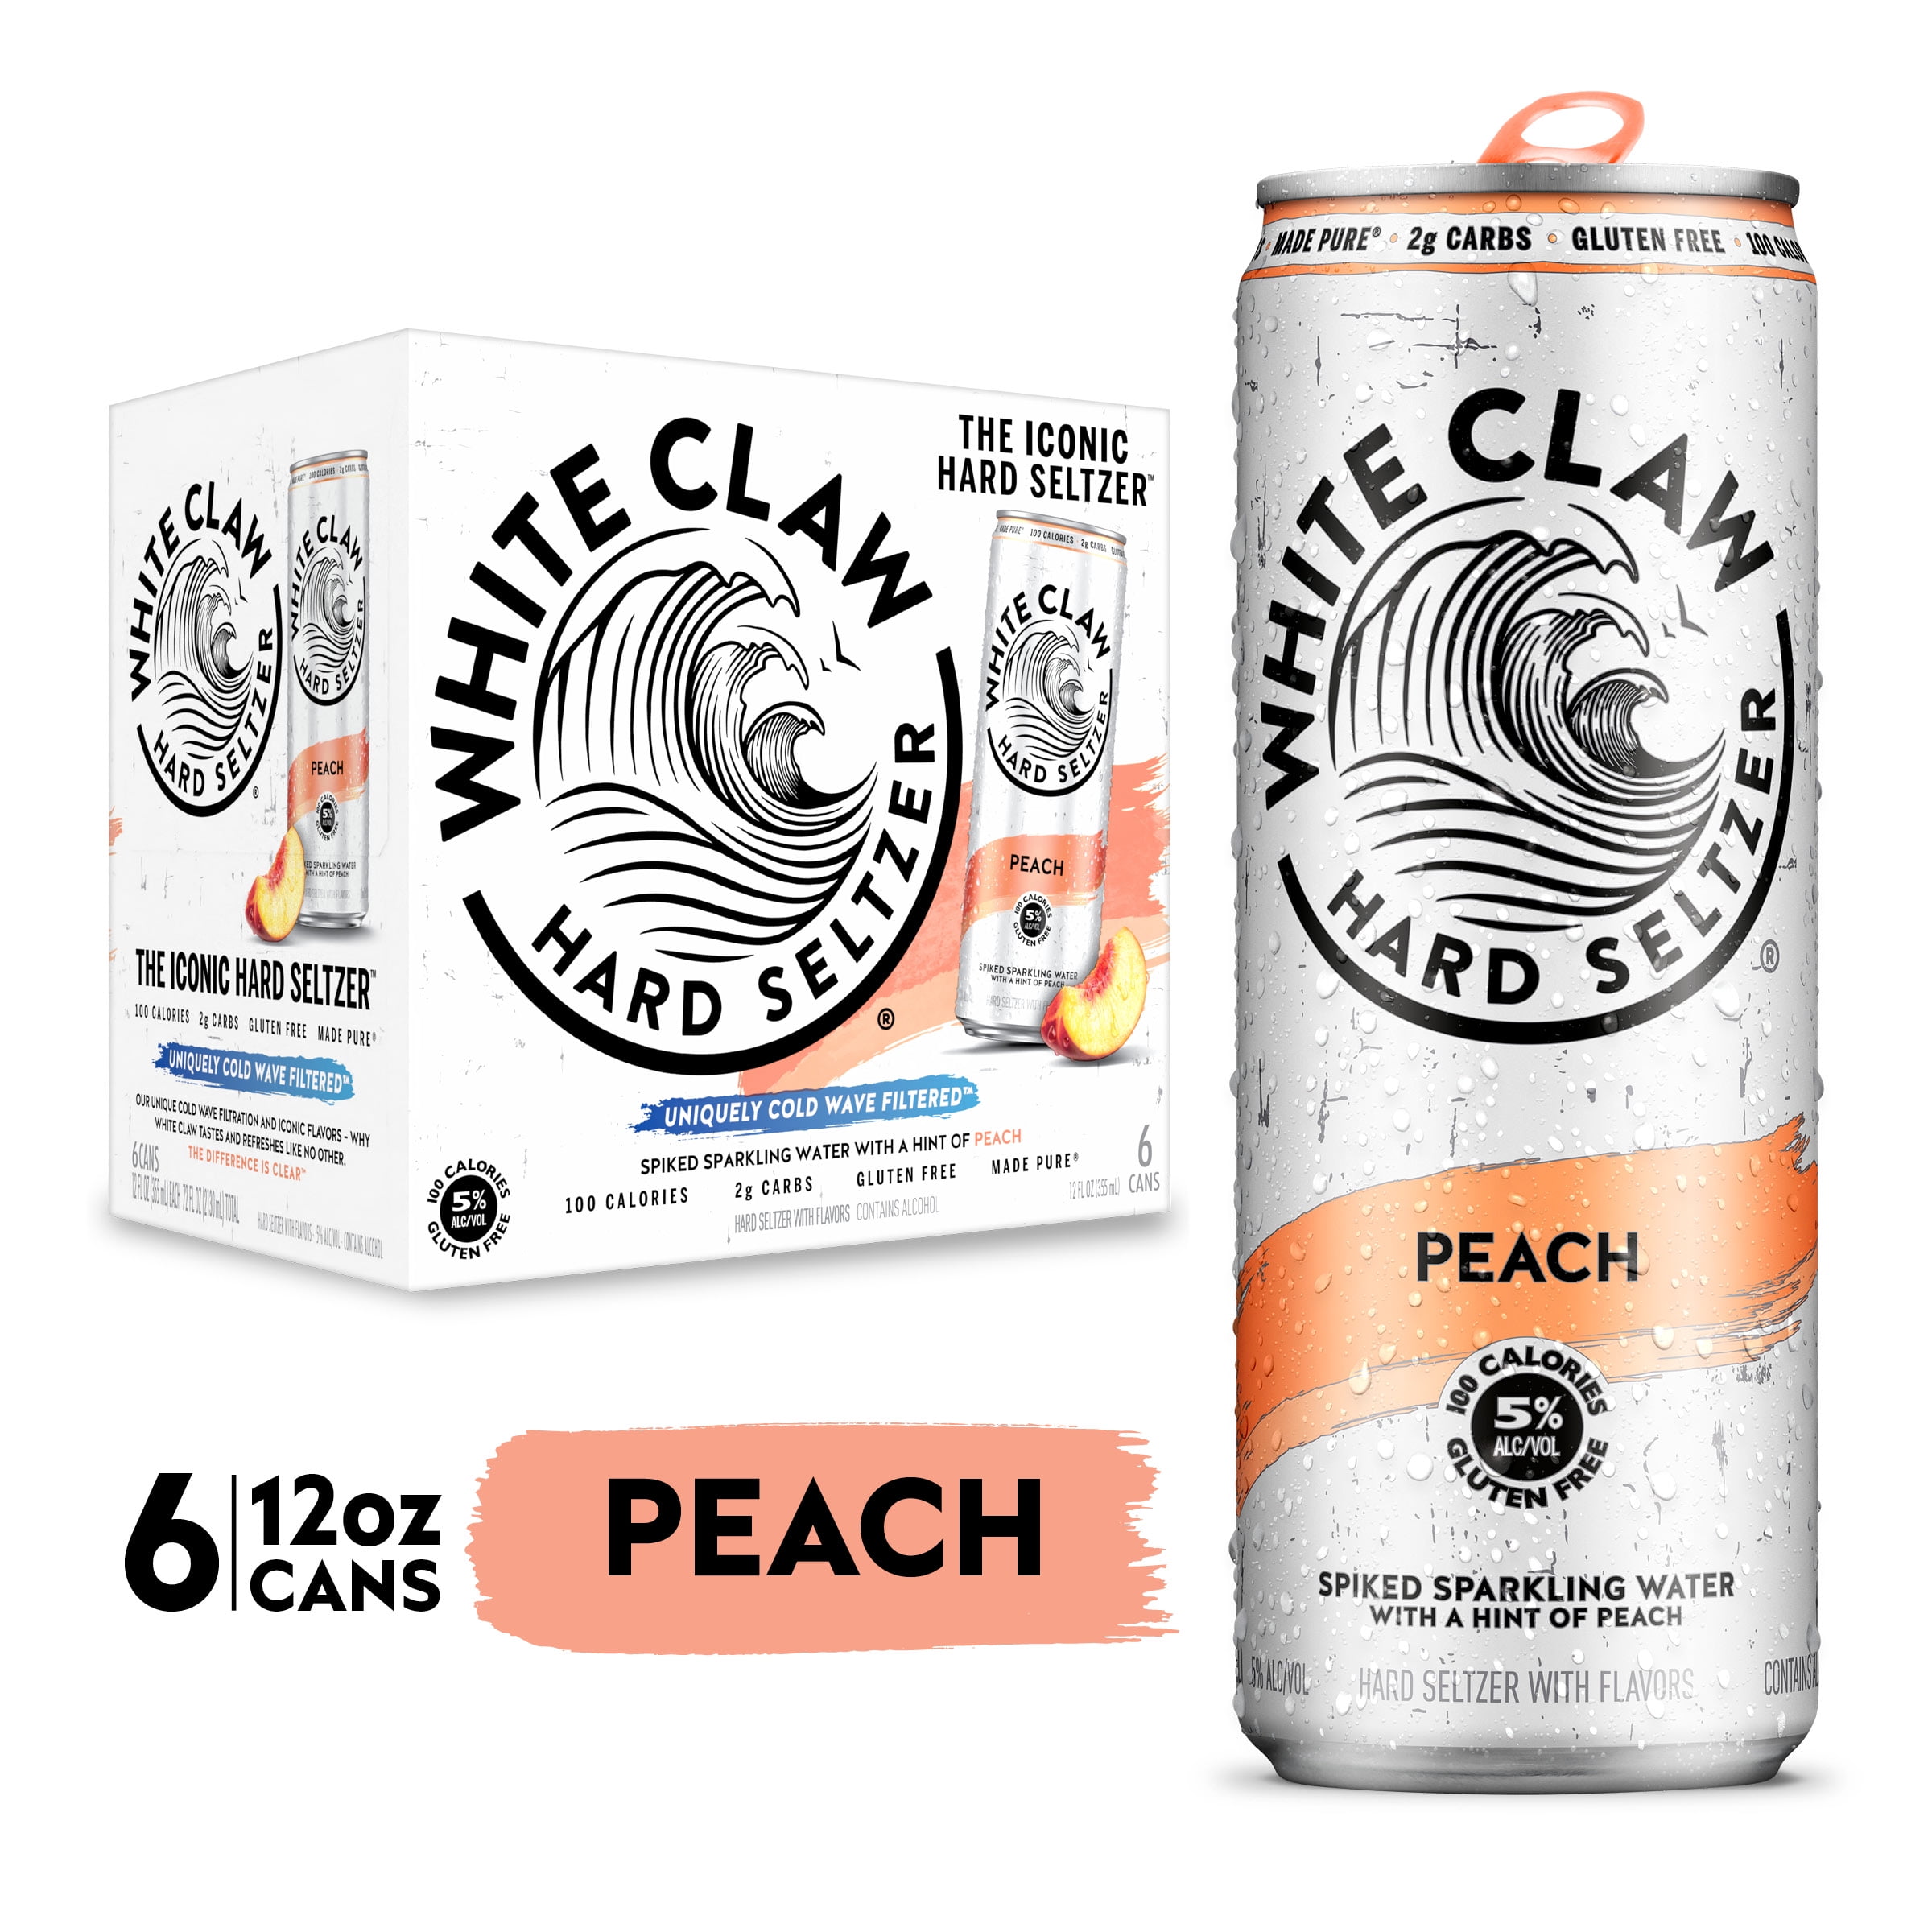 White Claw Hard Seltzer Peach, 6 Pack, 12 fl oz Cans, 5% ABV